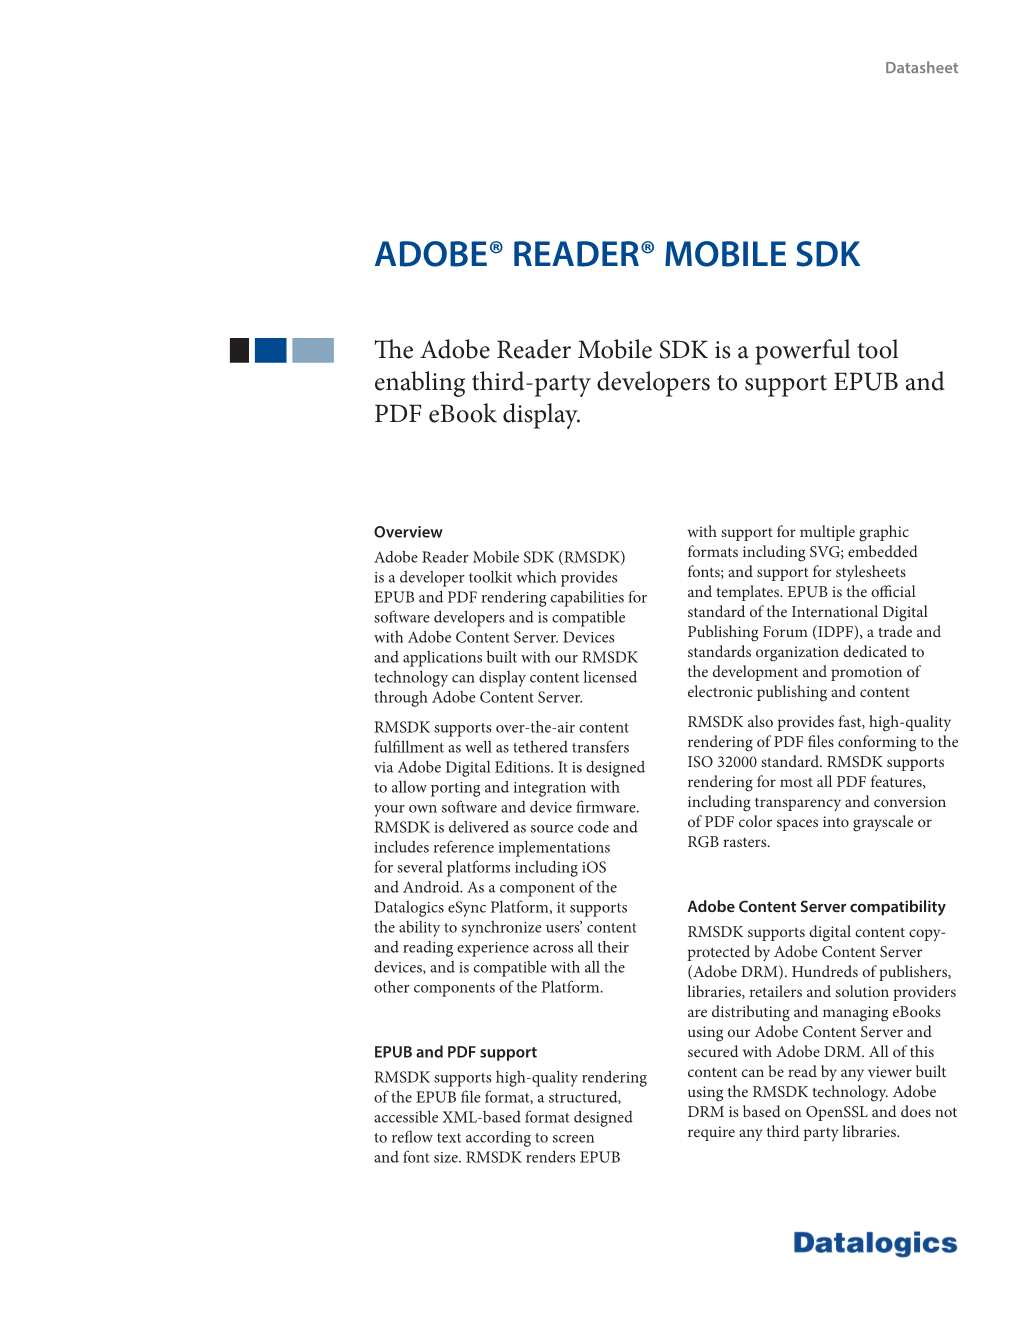 Adobe® Reader® Mobile Sdk